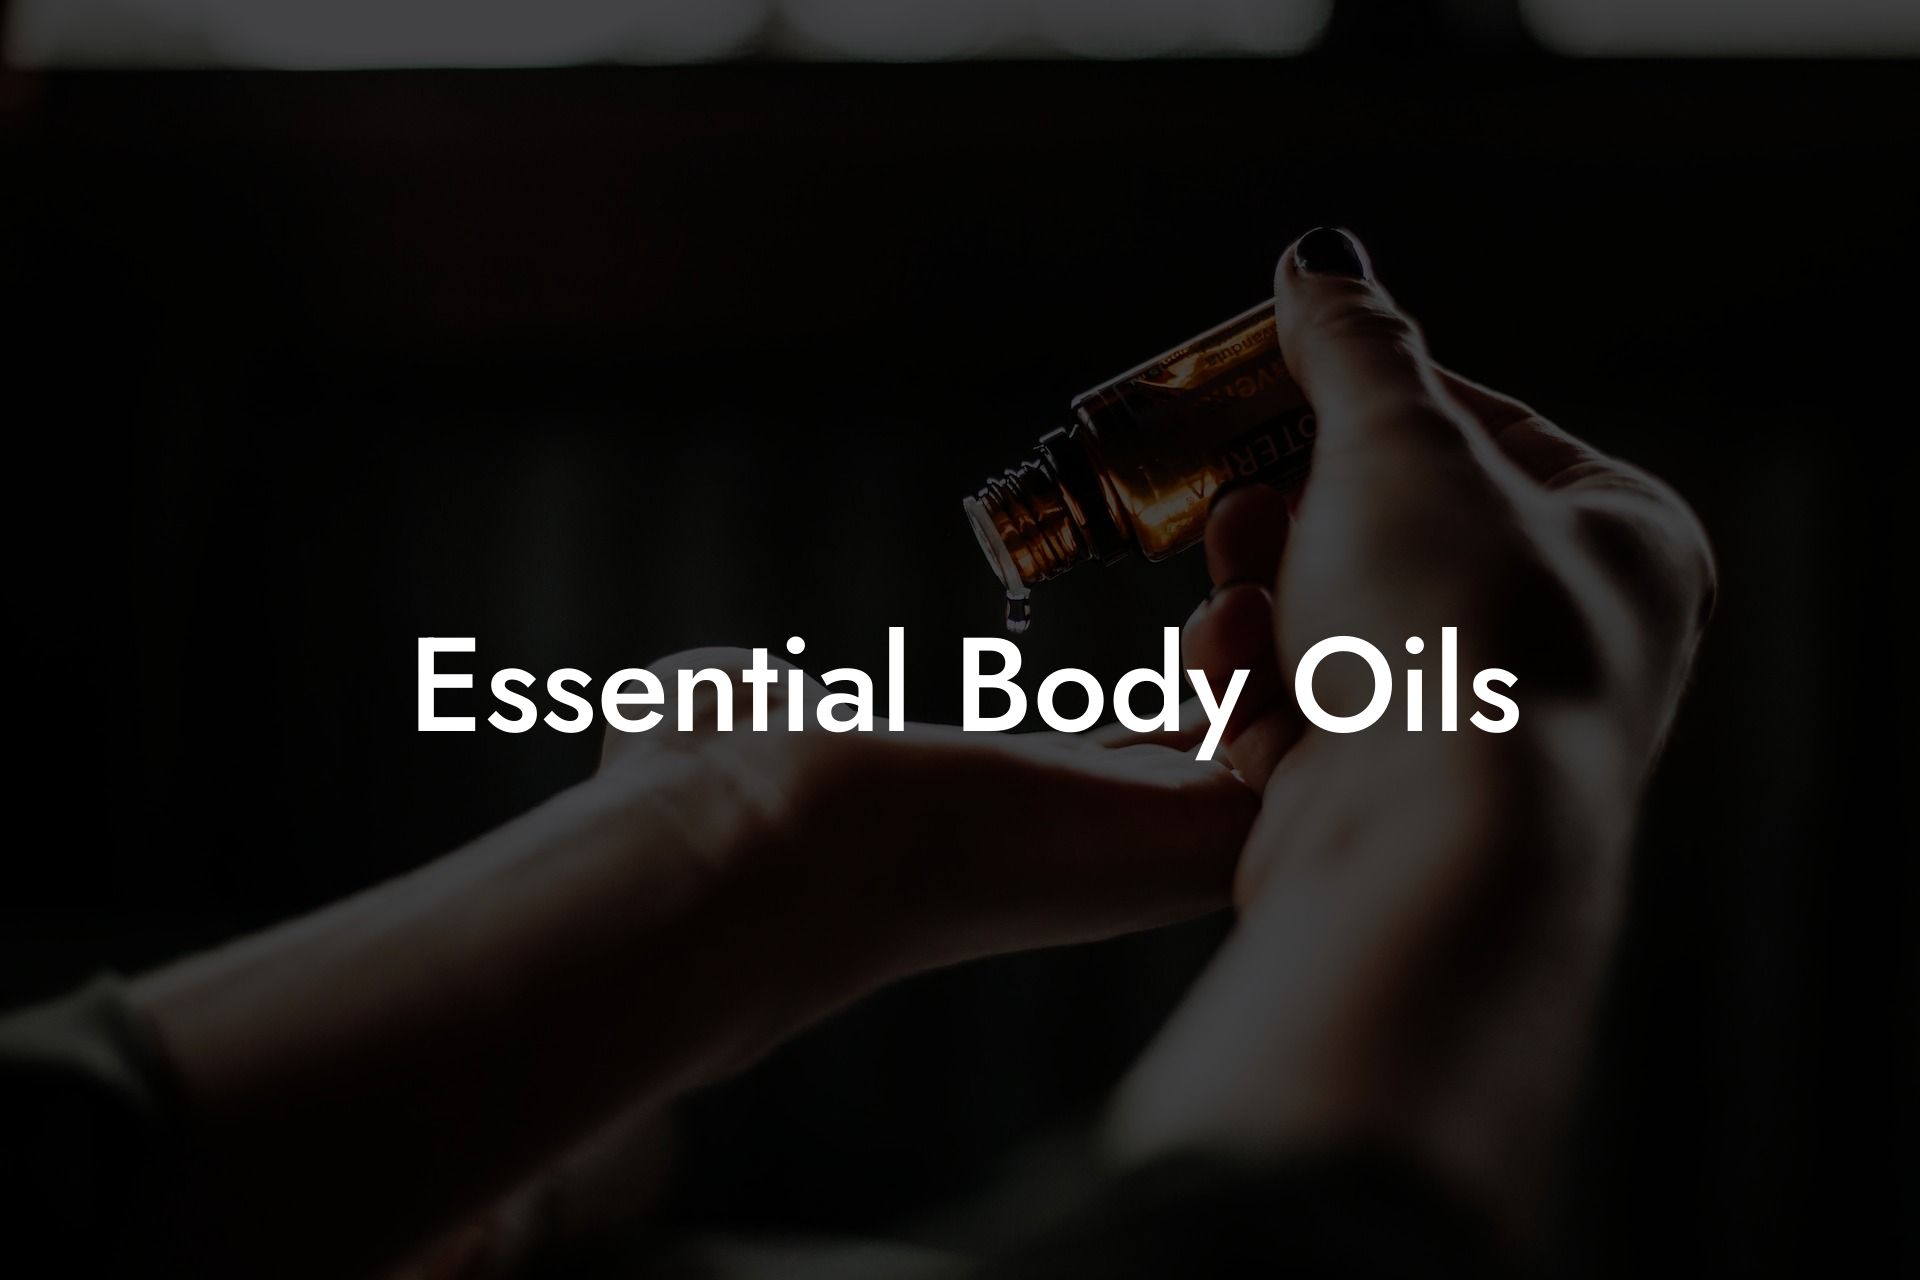 Essential Body Oils